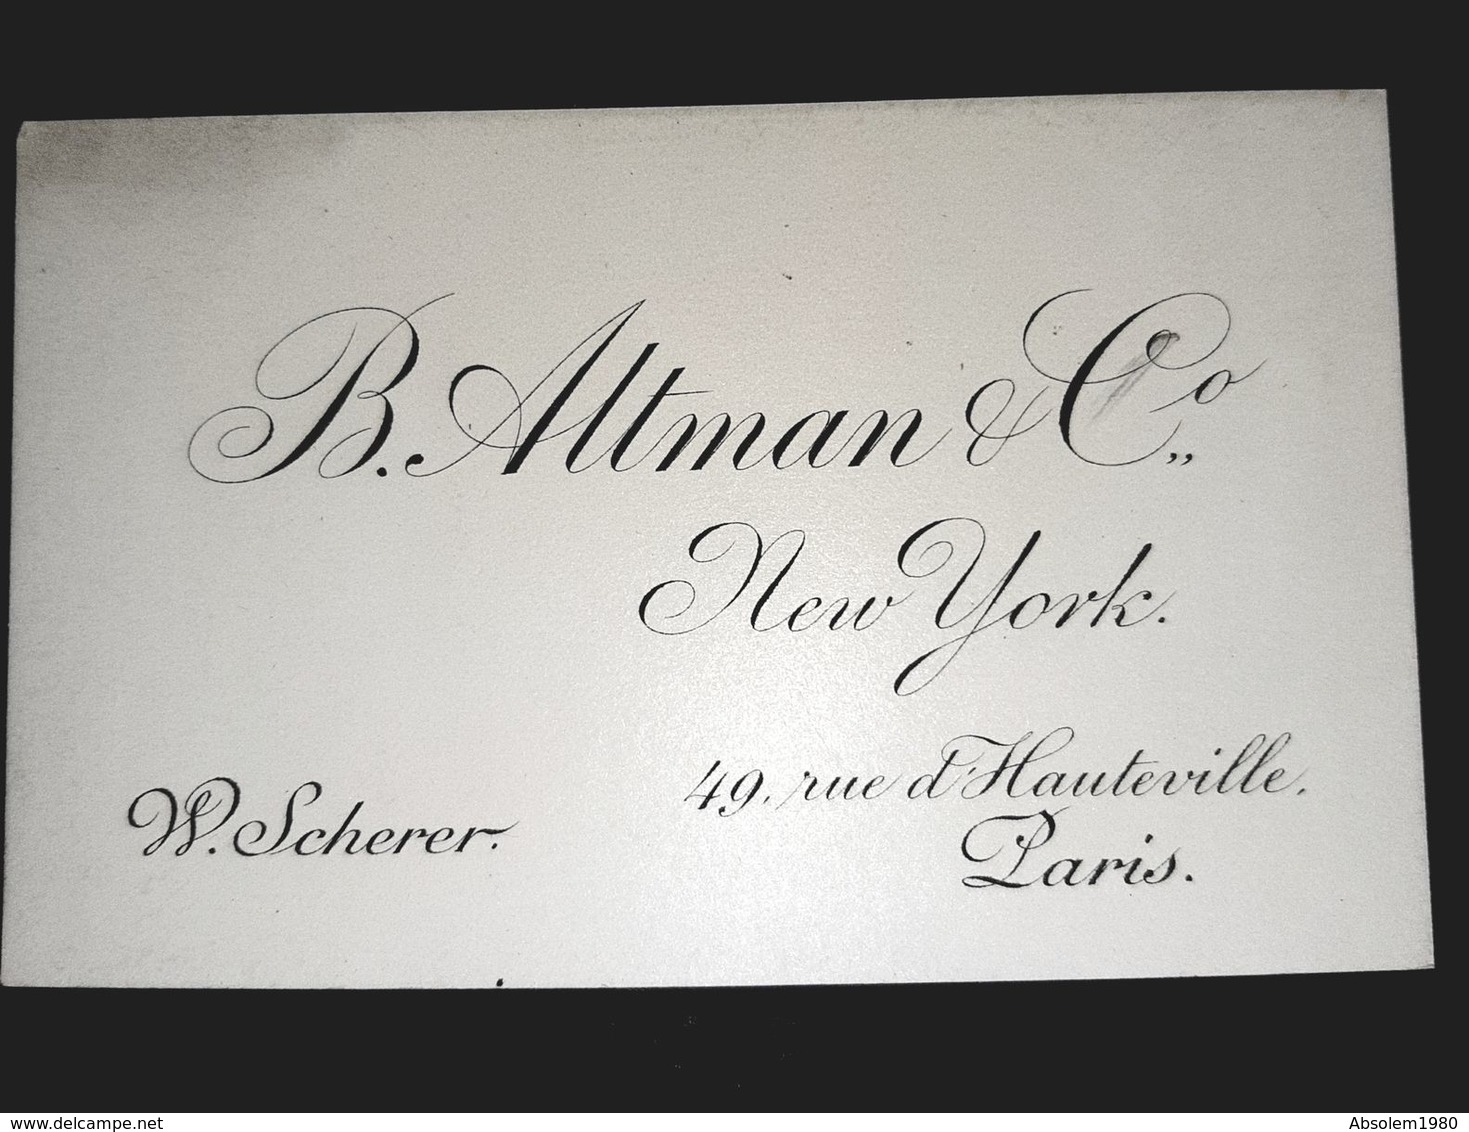 . ALTMAN & CO GRANDS MAGASINS NEW YORK 5ème AVENUE FIFTH AVENUE ANCIENNE CARTE VISITE B W. SHERER ETATS UNIS USA STORE - Visiting Cards